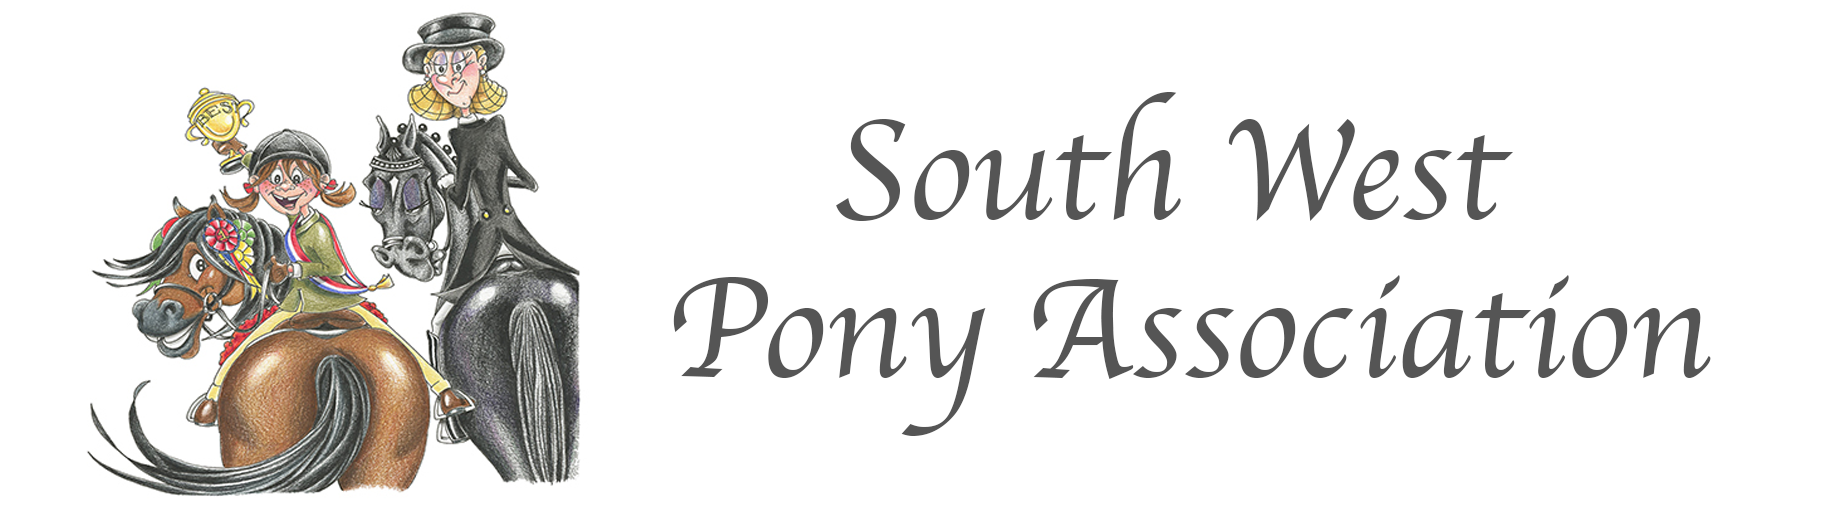 South West Pony Association